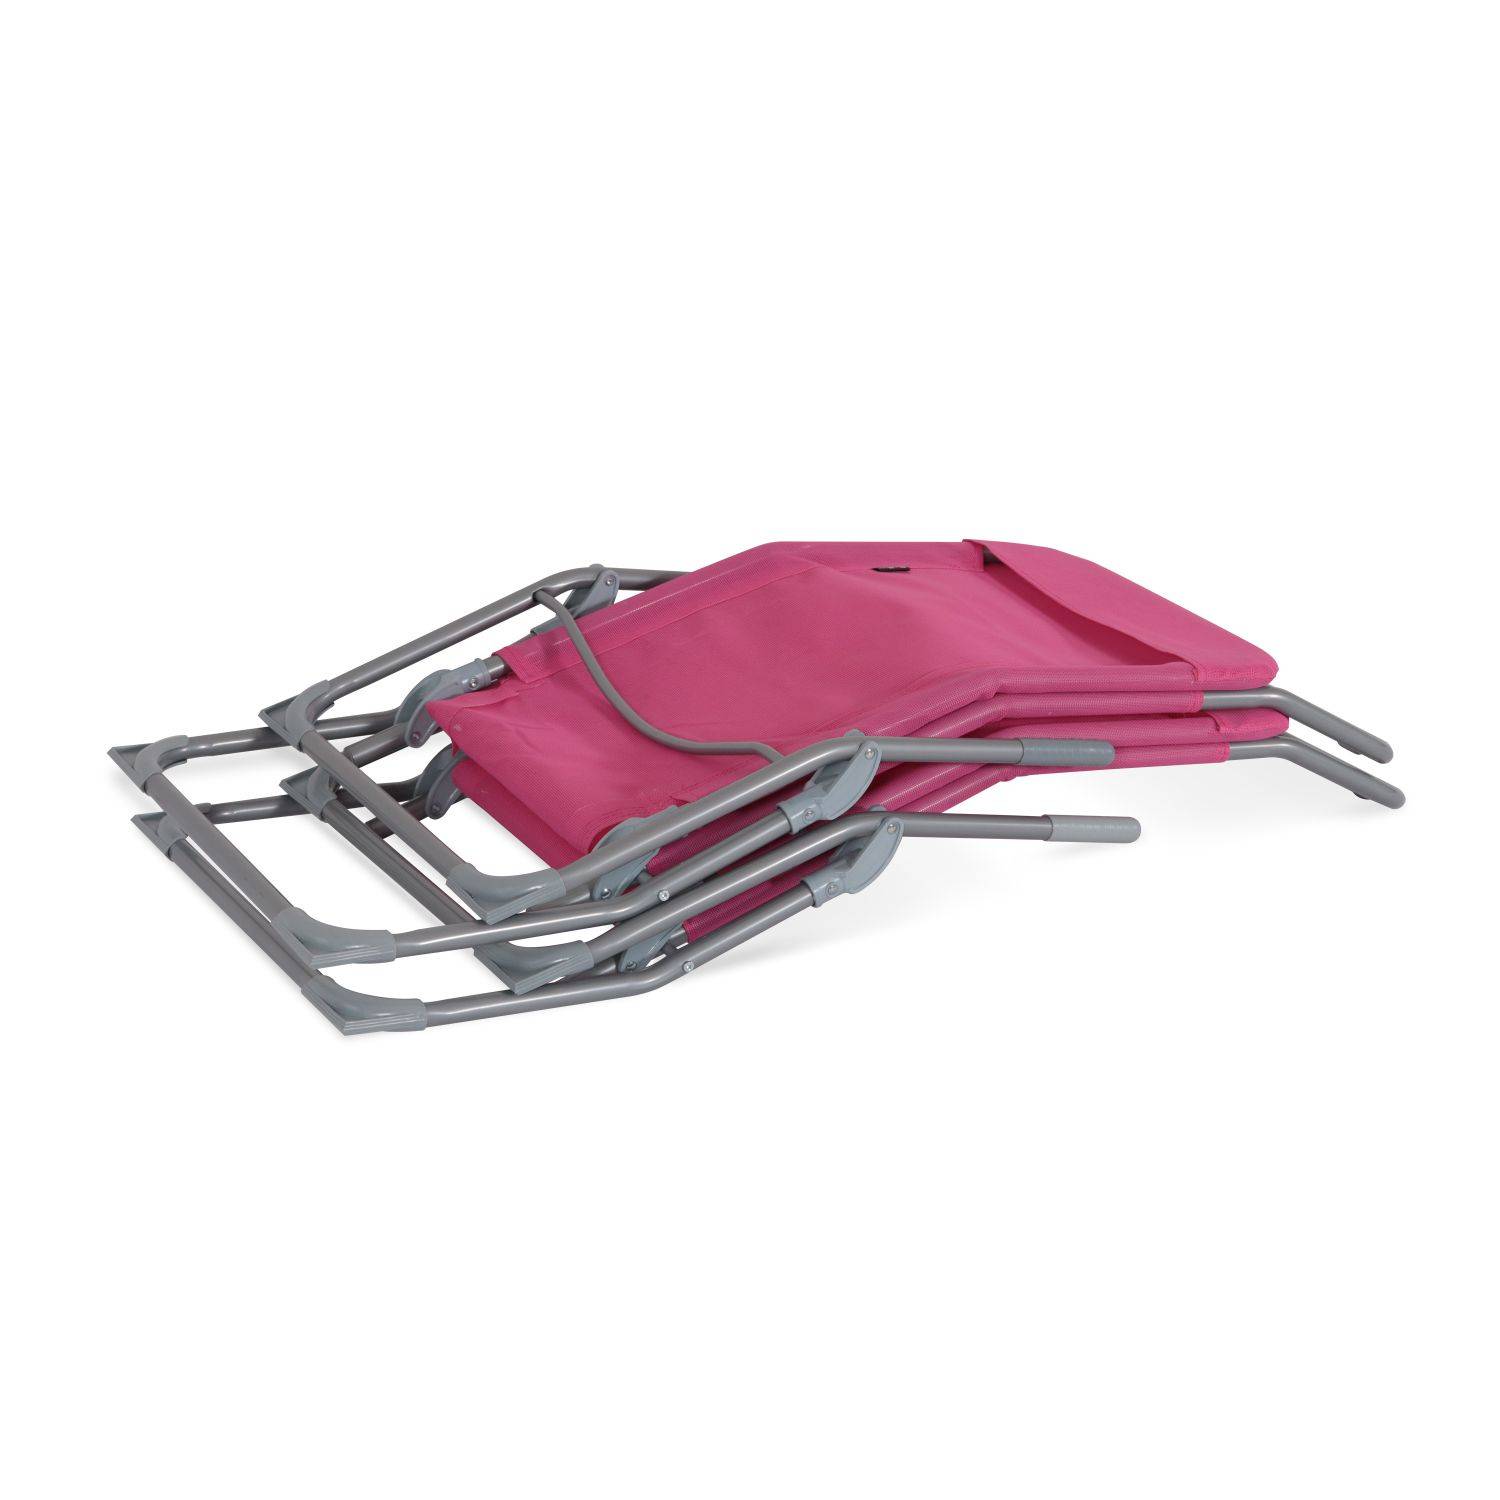 Set van 2 opvouwbare ligstoelen - Levito Roze - Ligstoelen van textileen, 2 posities, opvouwbare ligstoelen Photo5